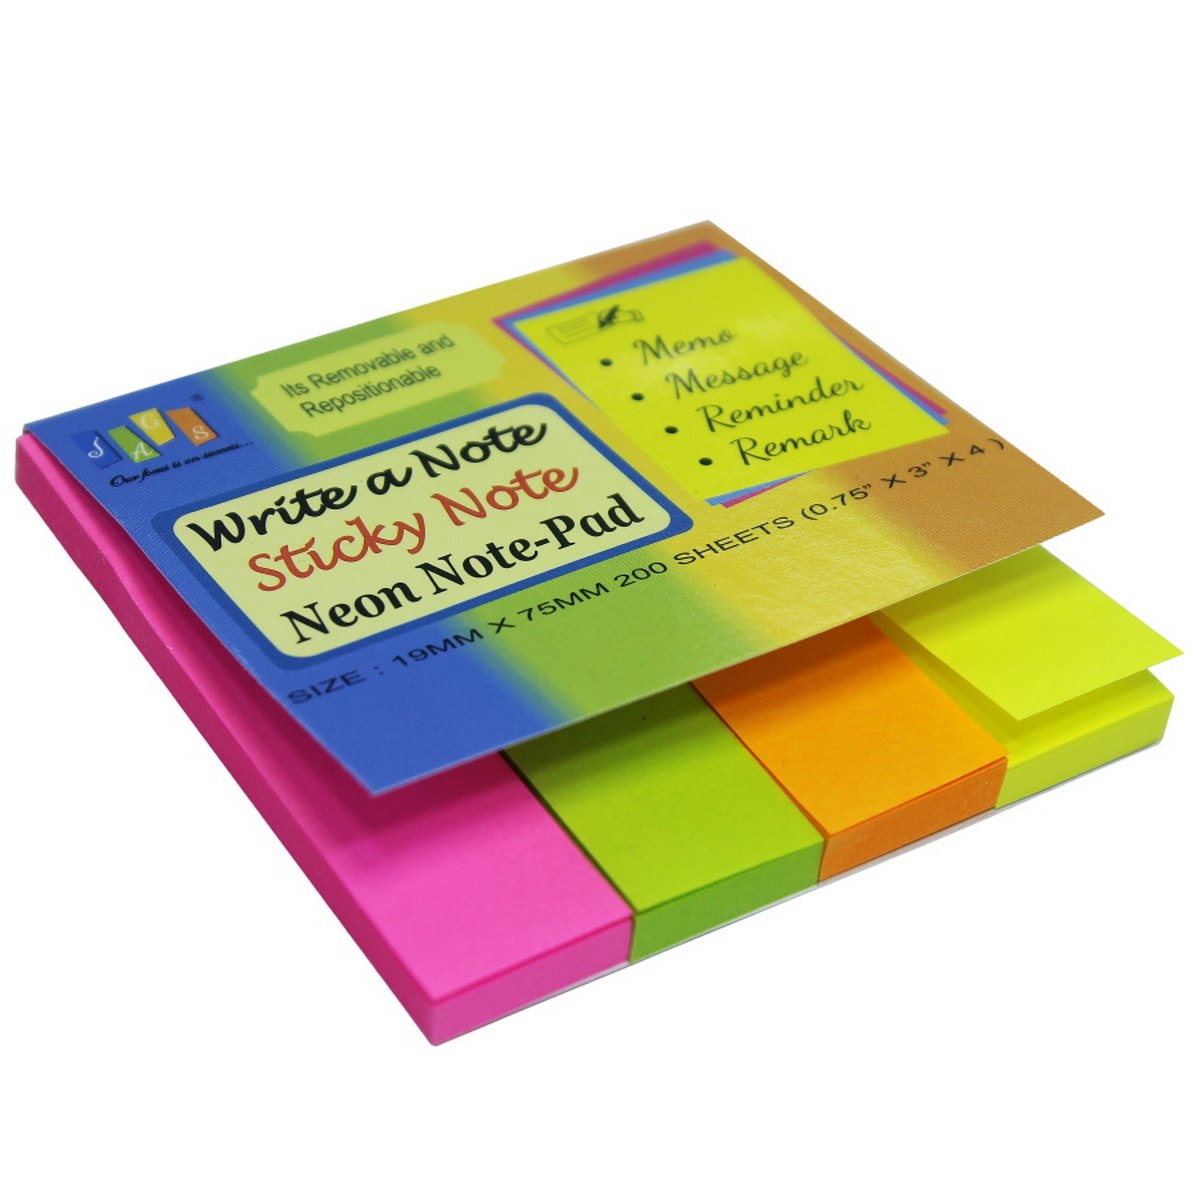 jags-mumbai Sticky Notes Sticky Note Pad